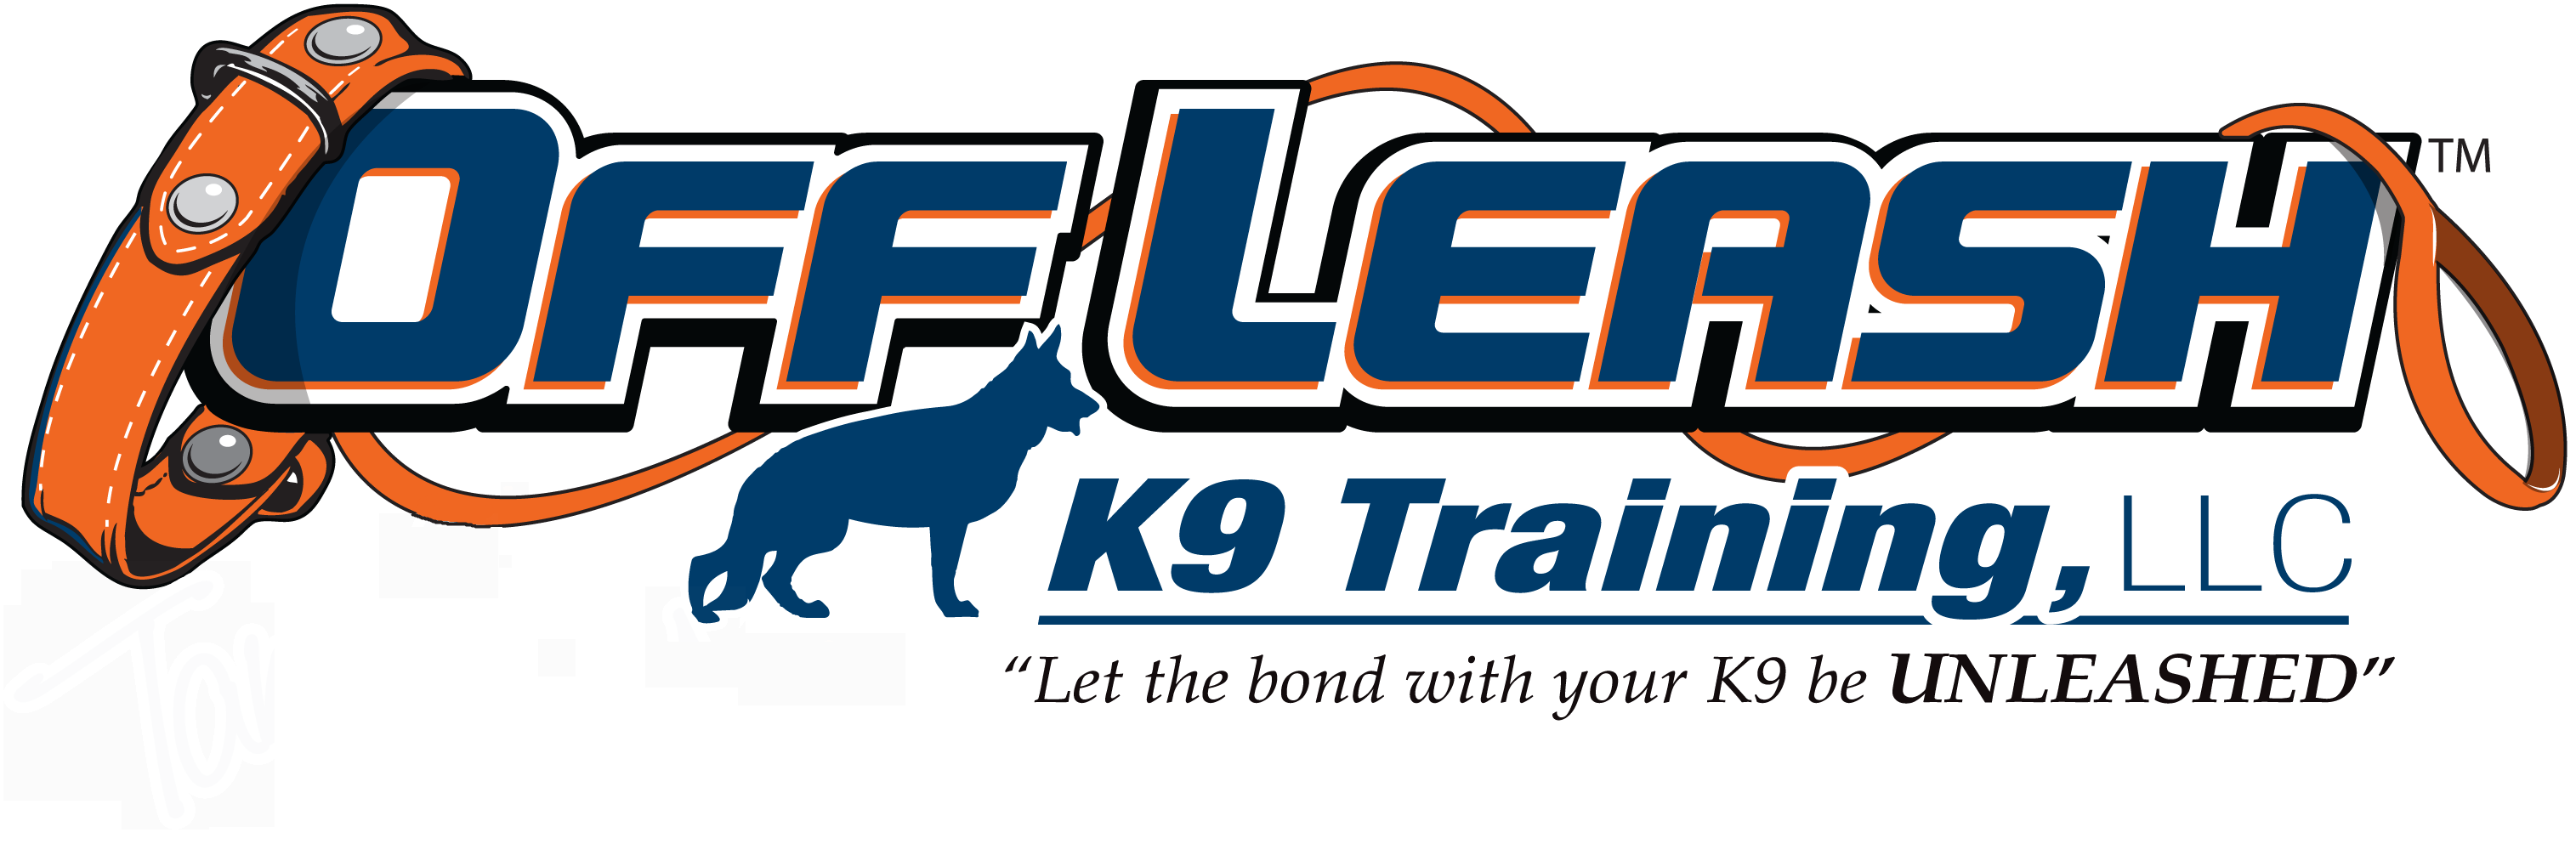 Newport News Offleash K9 Dog Training